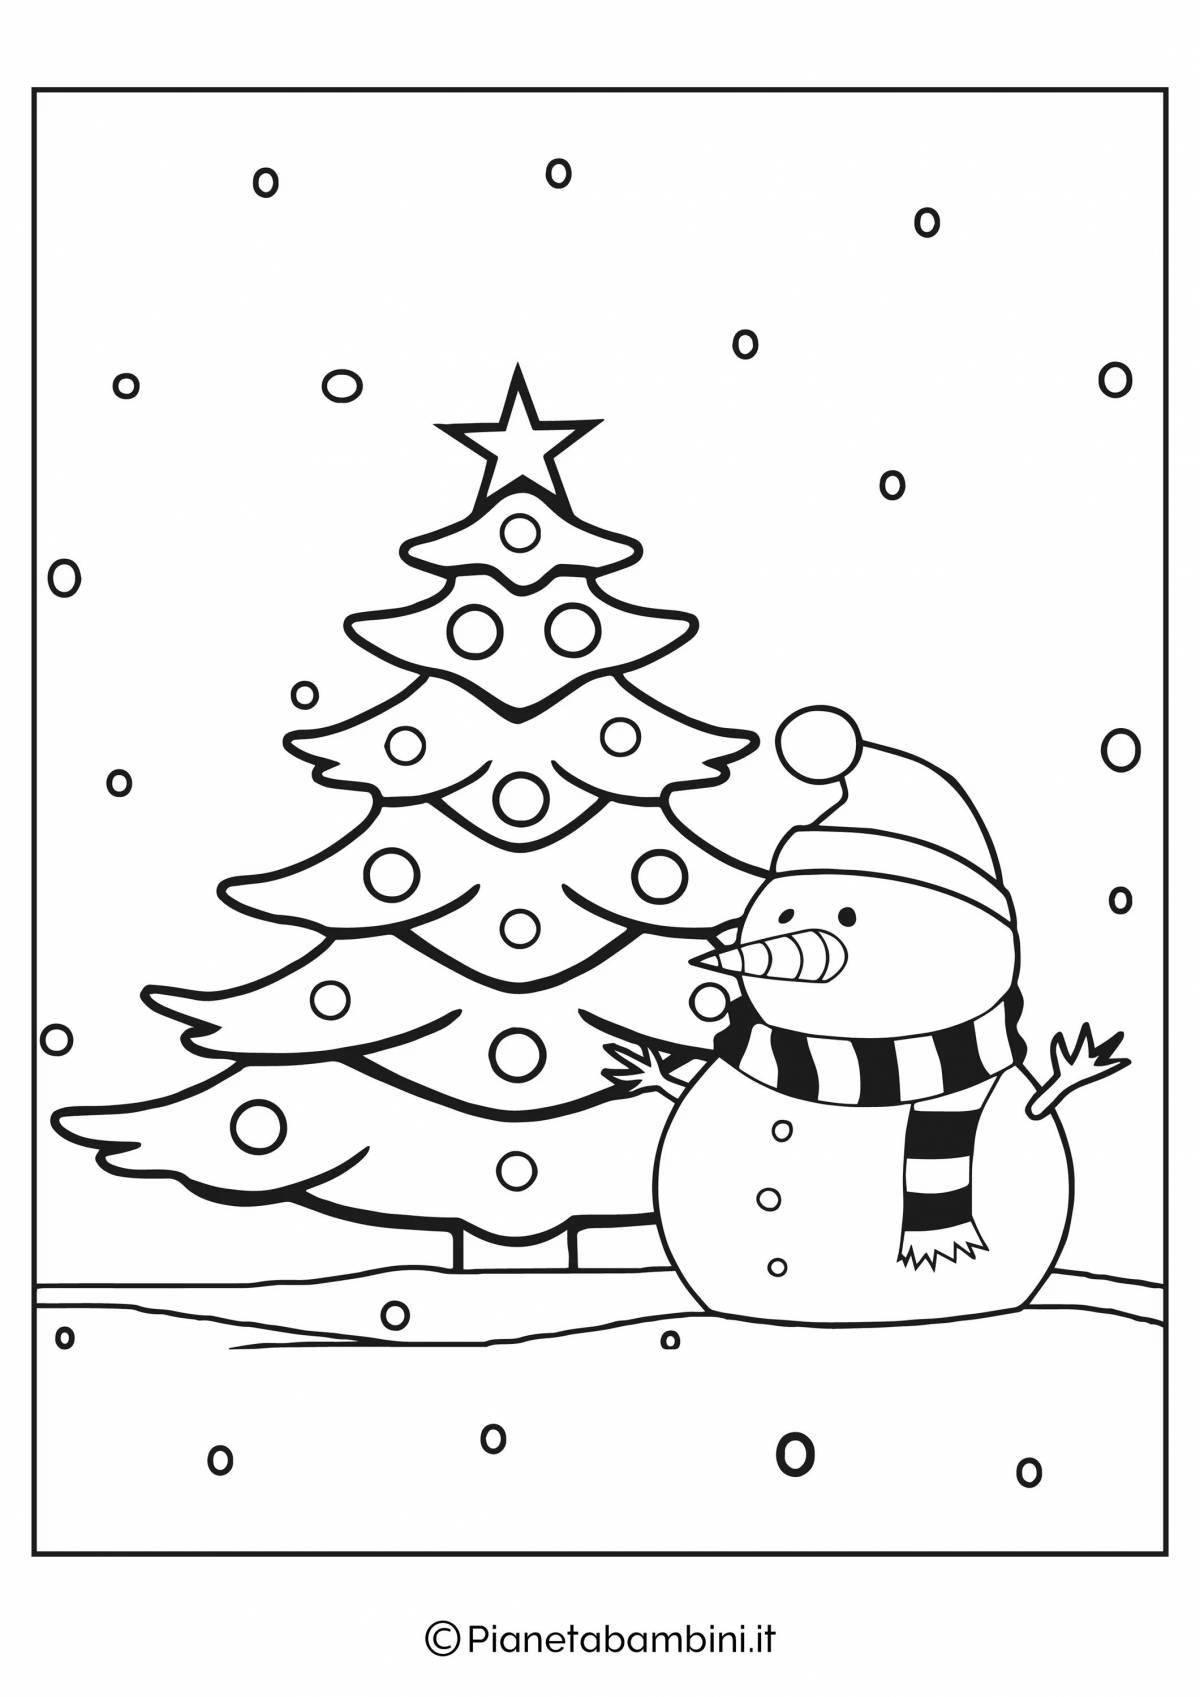 Blissful Christmas tree drawing